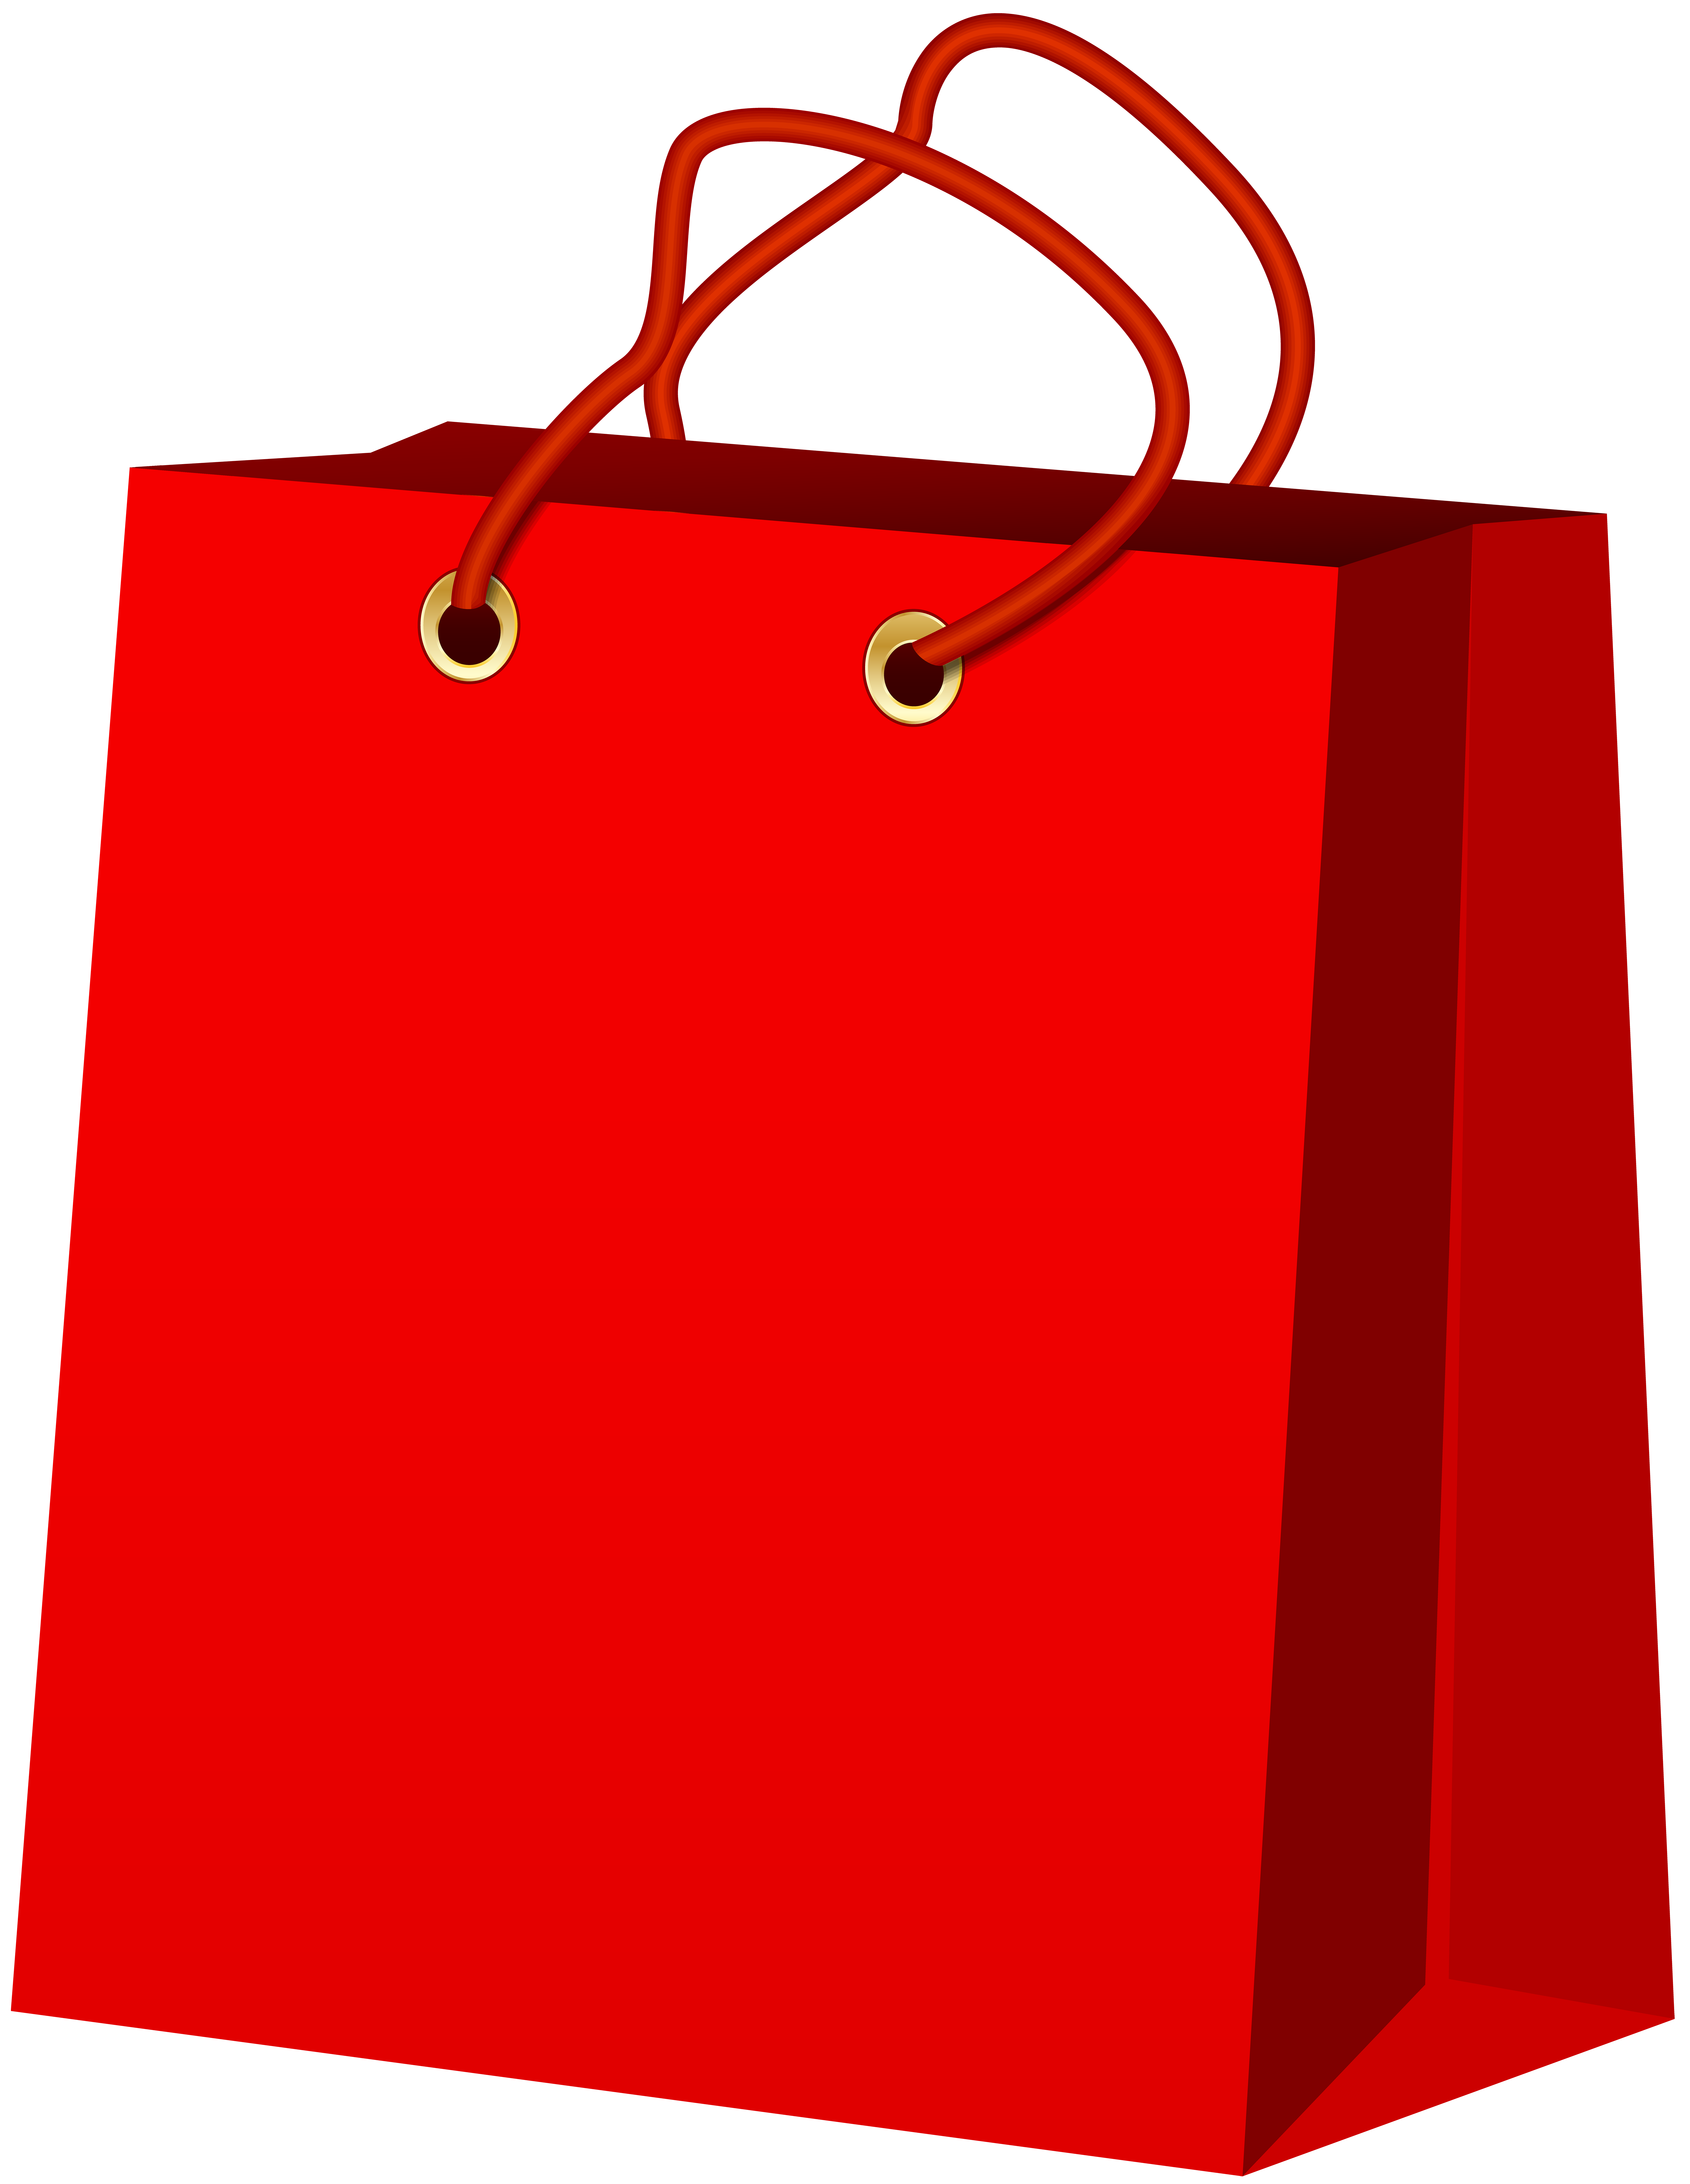 Red Bag Clipart PNG Images, Red Bag Beautiful Bag Cartoon Illustration Hand  Drawn Bag Illustration, Ladies Bag Illustration, Stylish Bag, Red Bag PNG  Image For Free Download